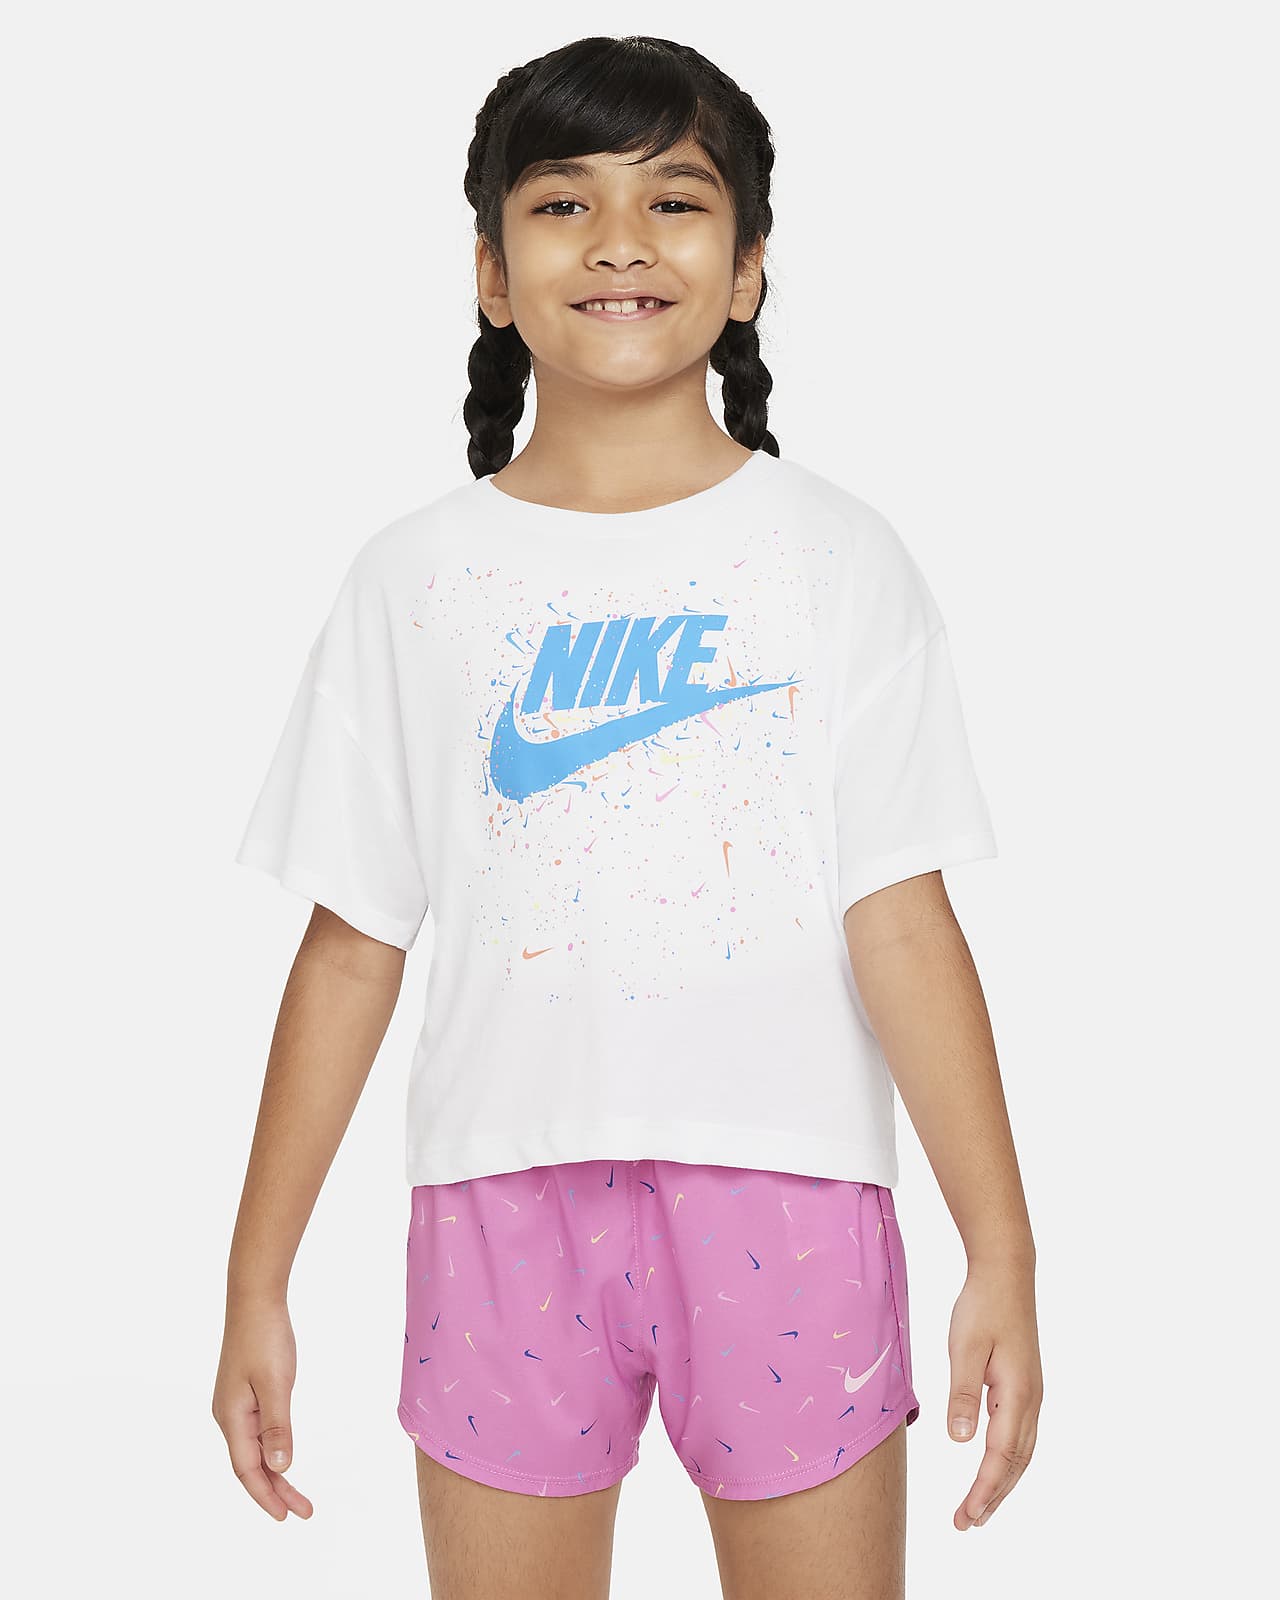 Nike Samarreta - Nen/a petit/a